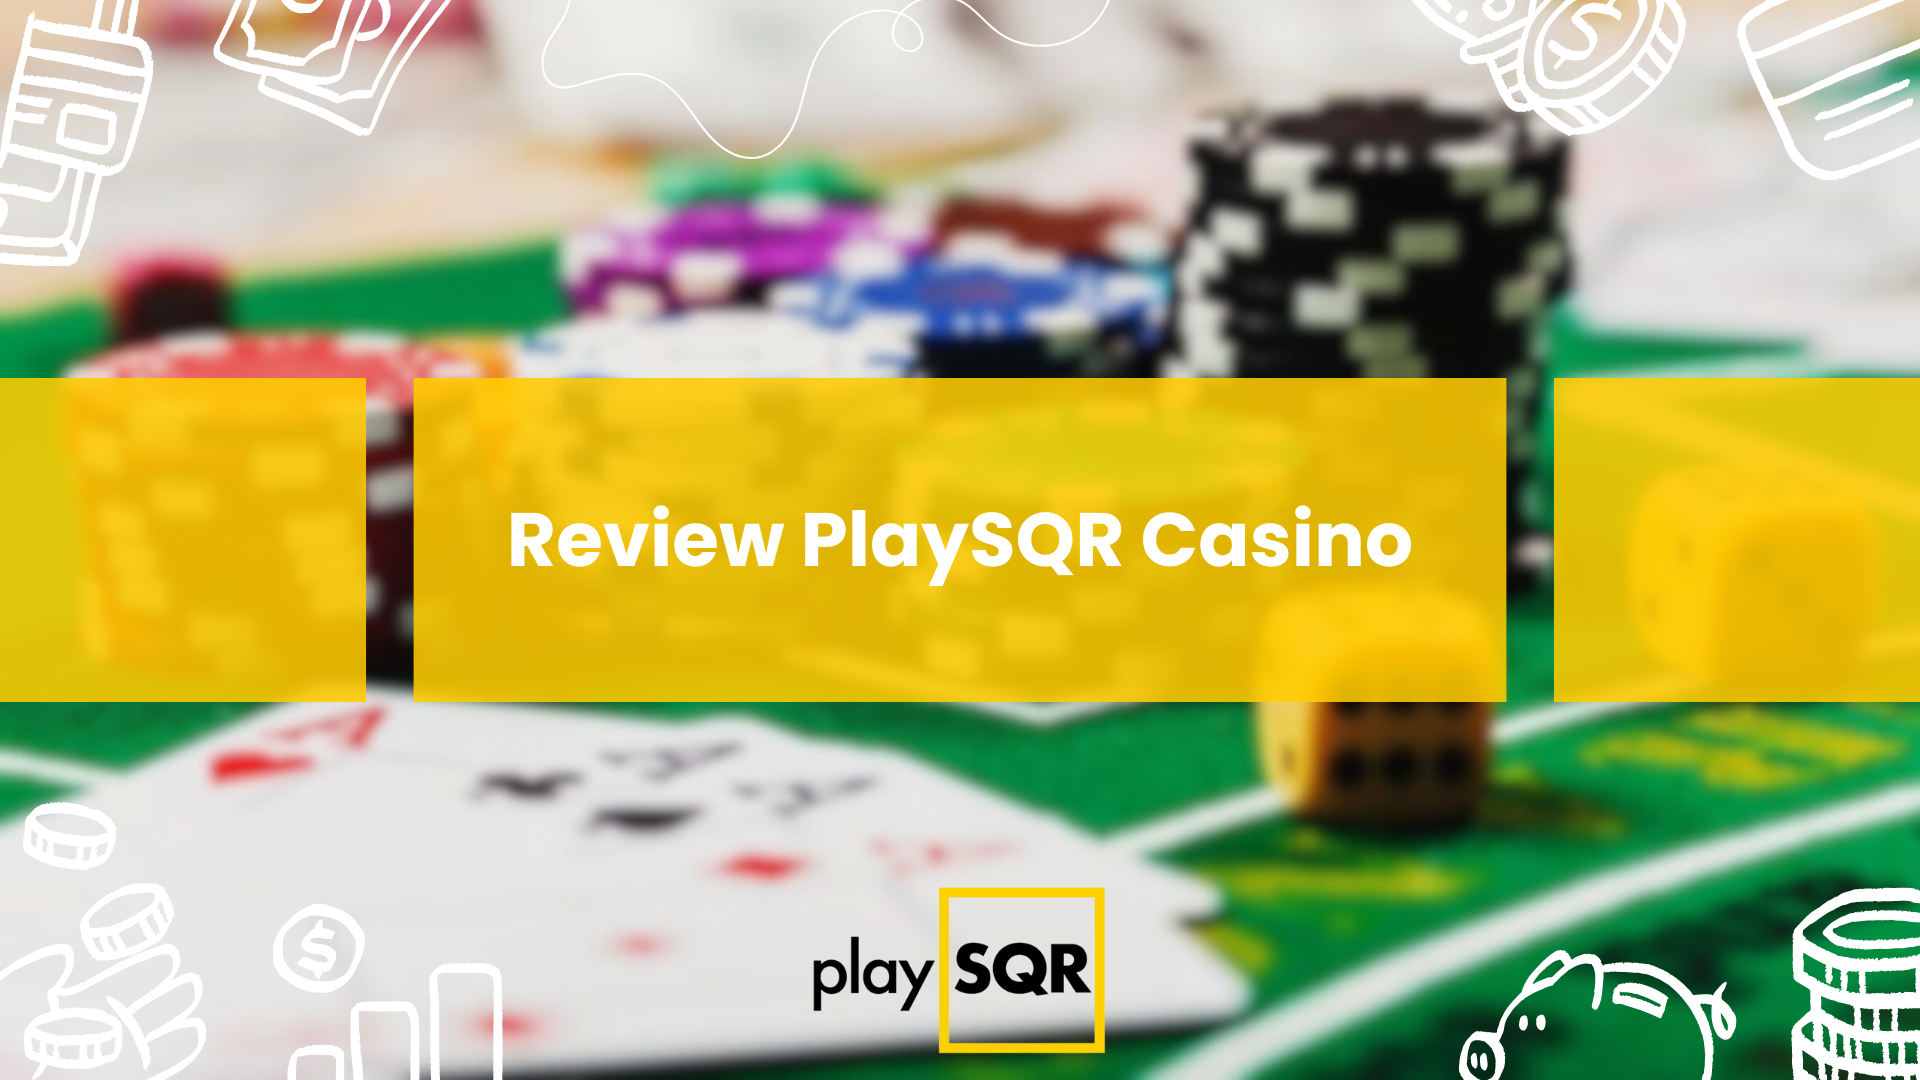 PlaySQR Casino